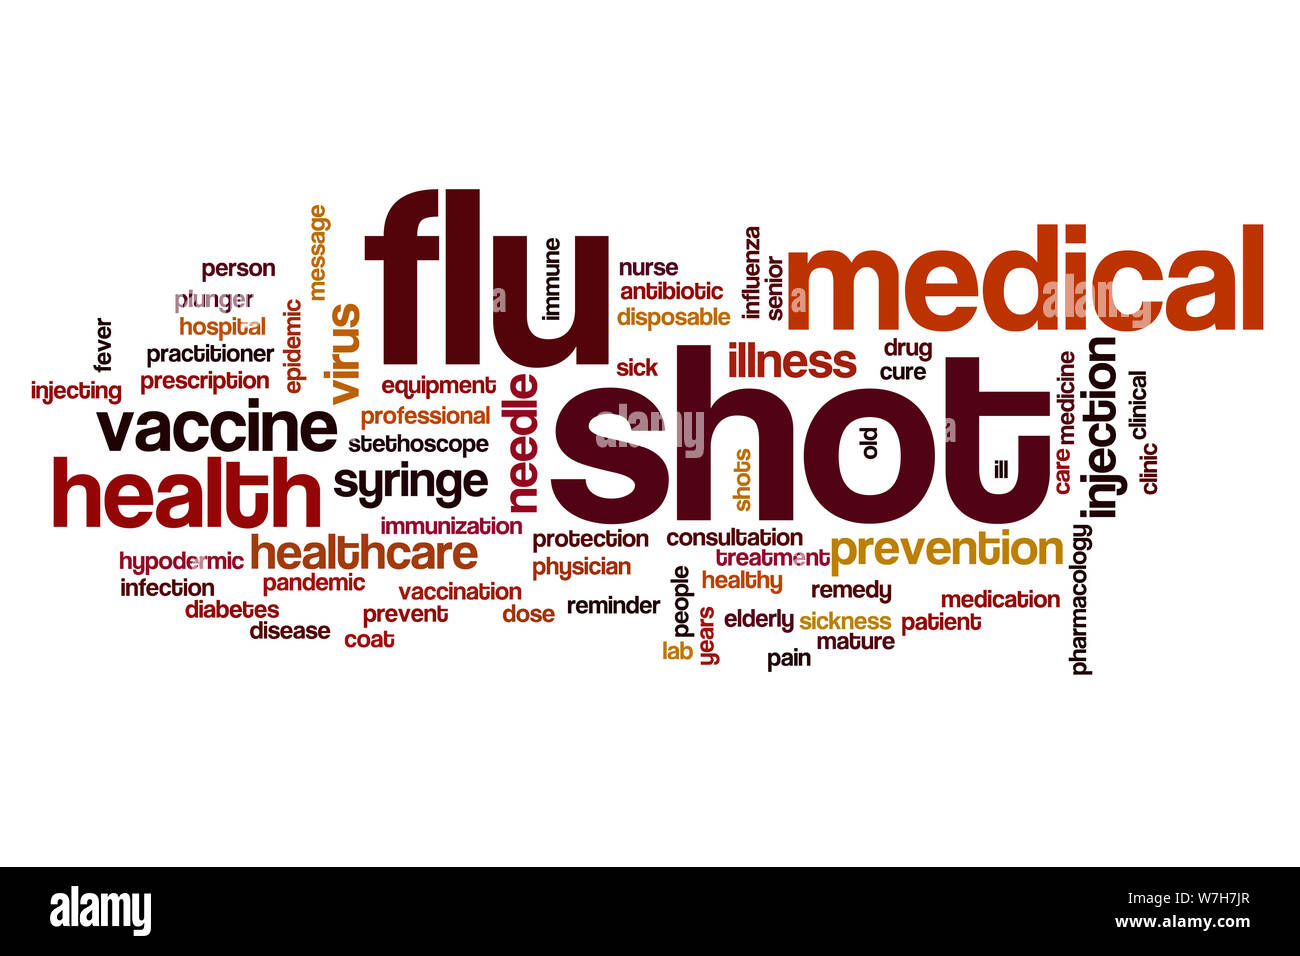 Flu shot word cloud concept Stock Photo